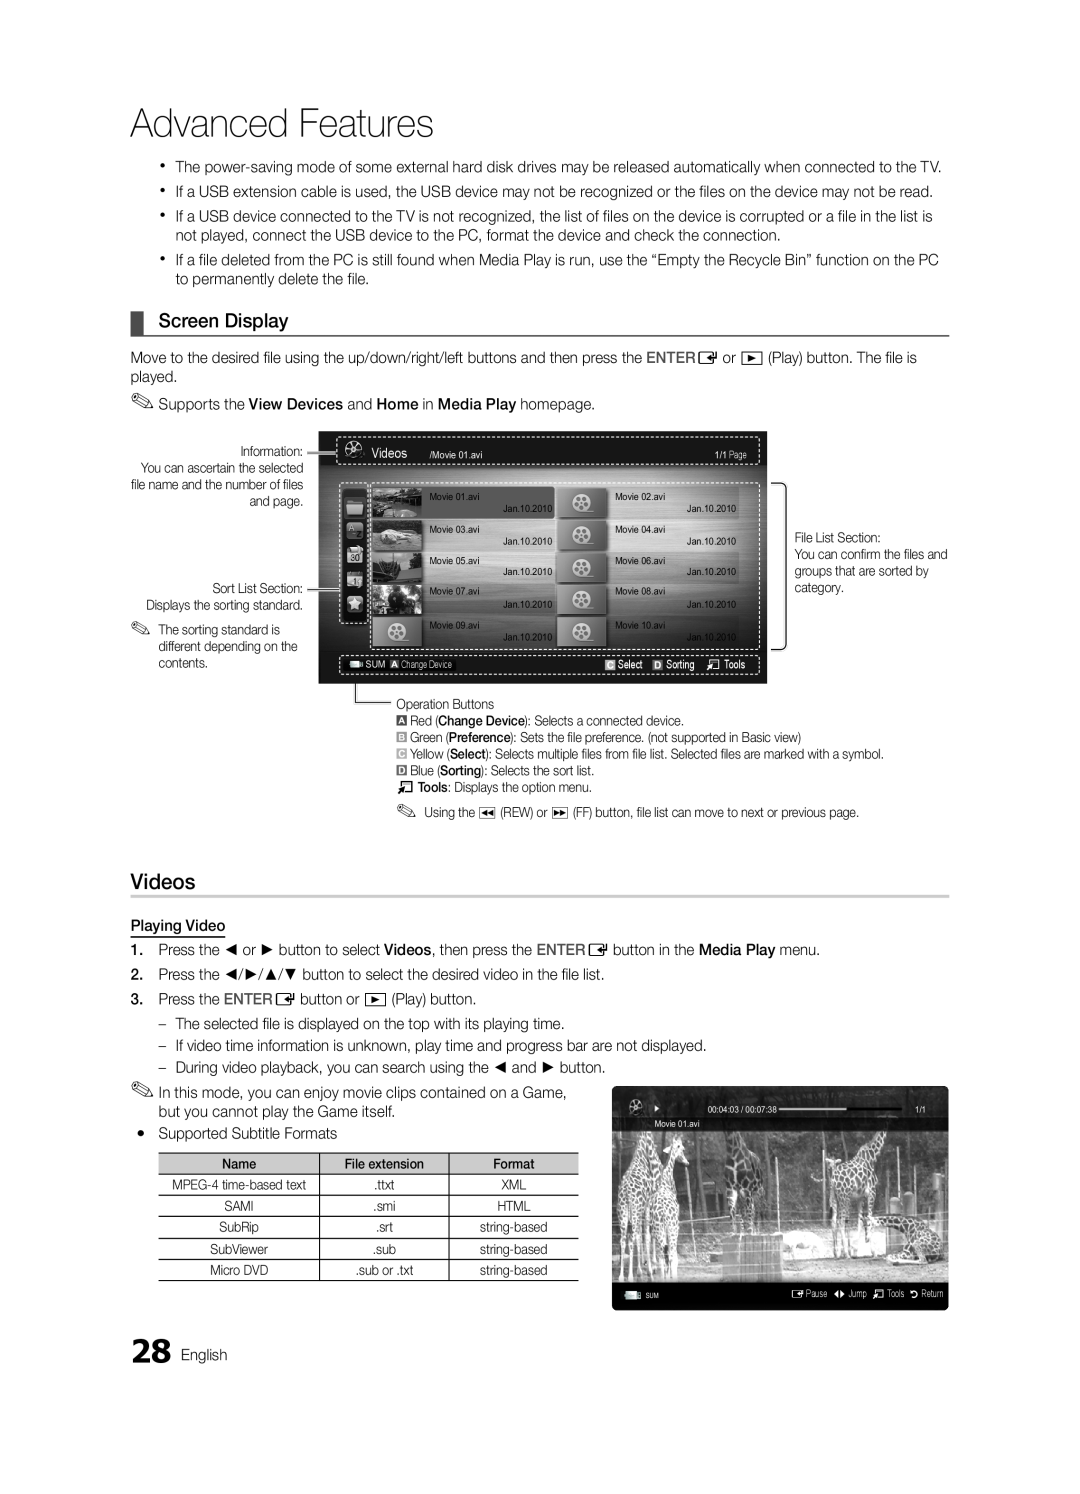 Samsung BN68-03114A-01, PC490-ZA user manual Videos, Screen Display, Advanced Features 